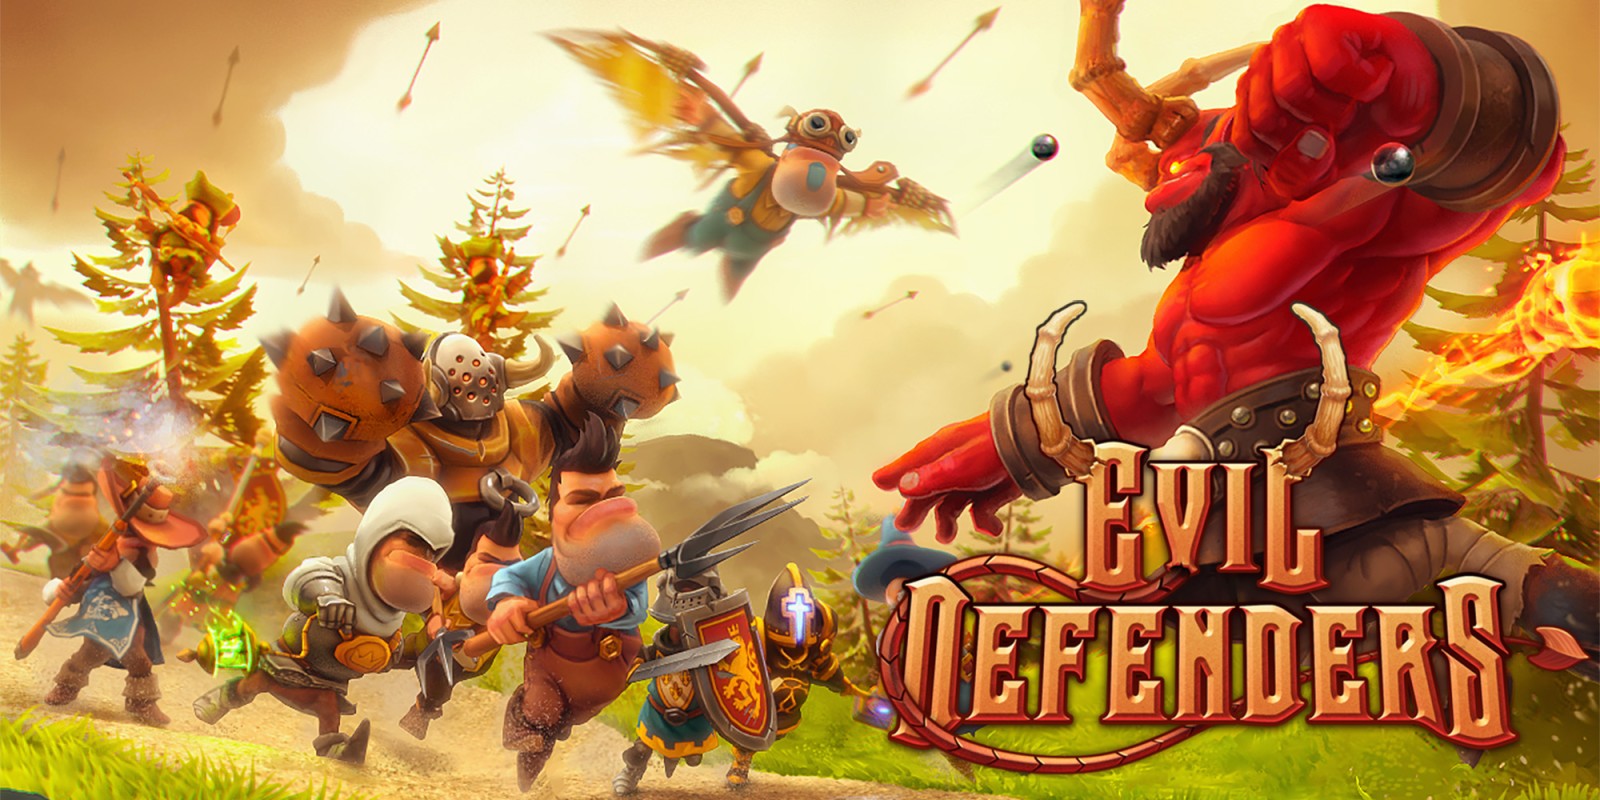 Download Evil defenders for PC